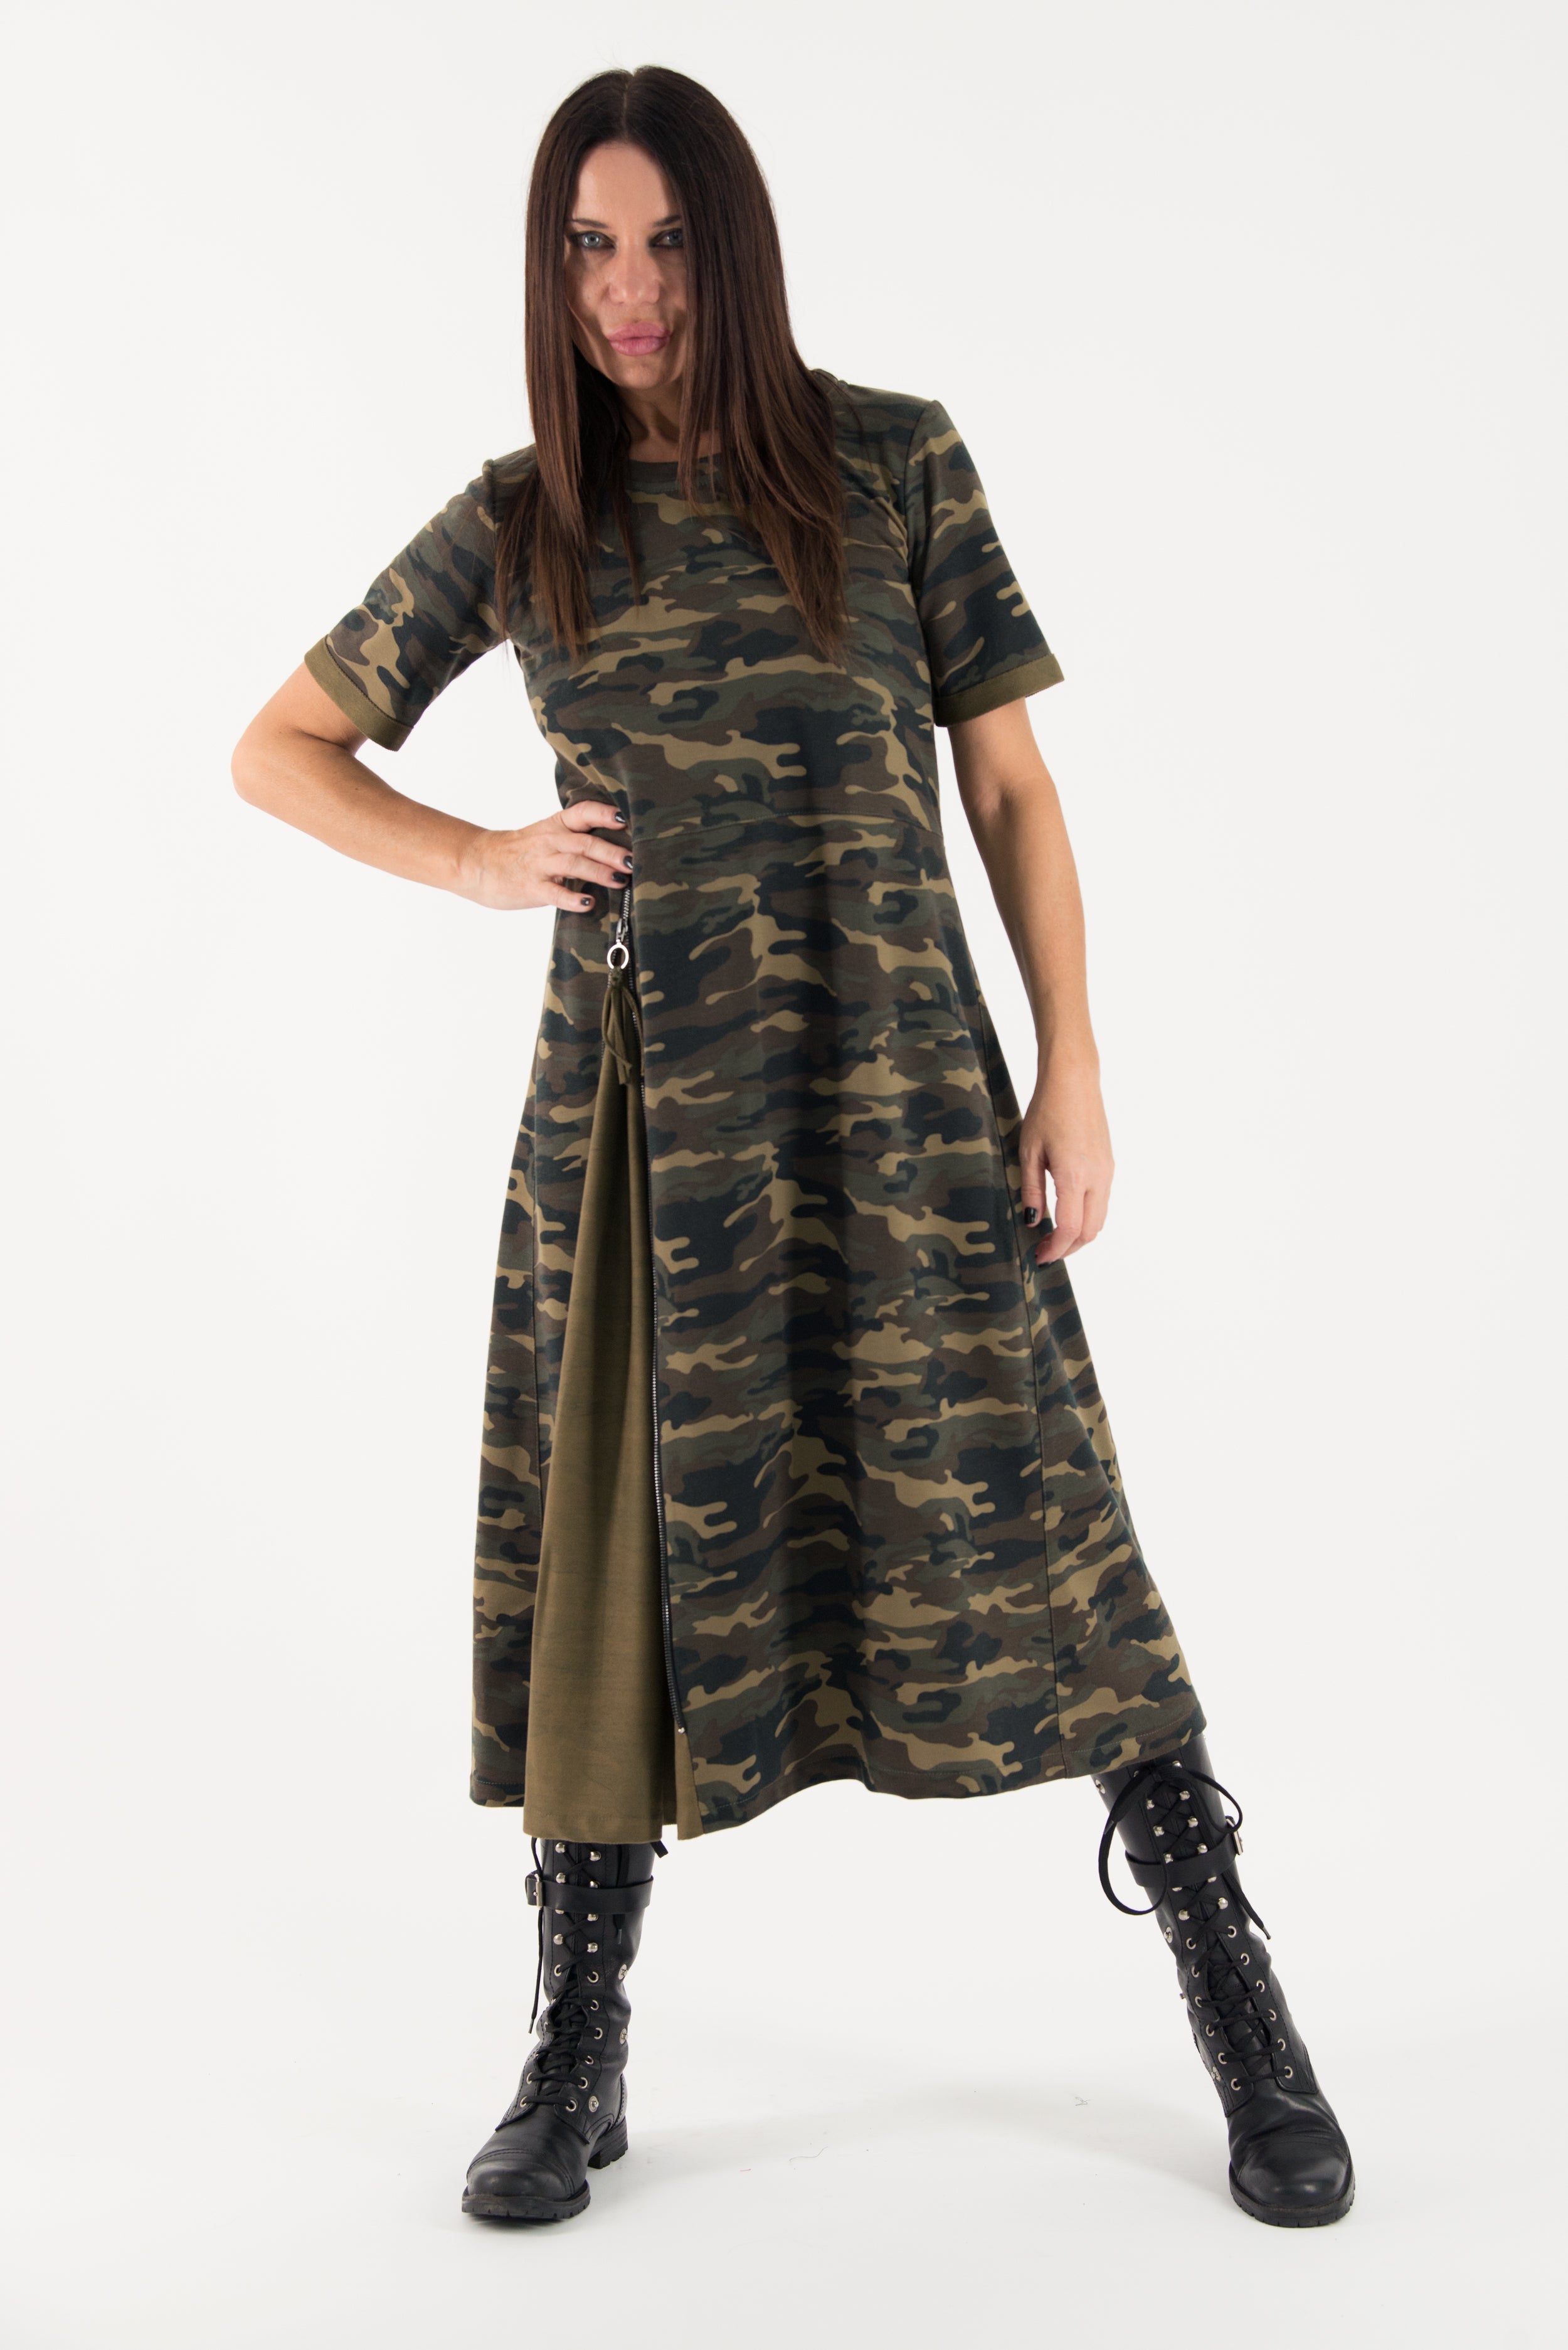 Autumn Camouflage Dress by EUG Fashion